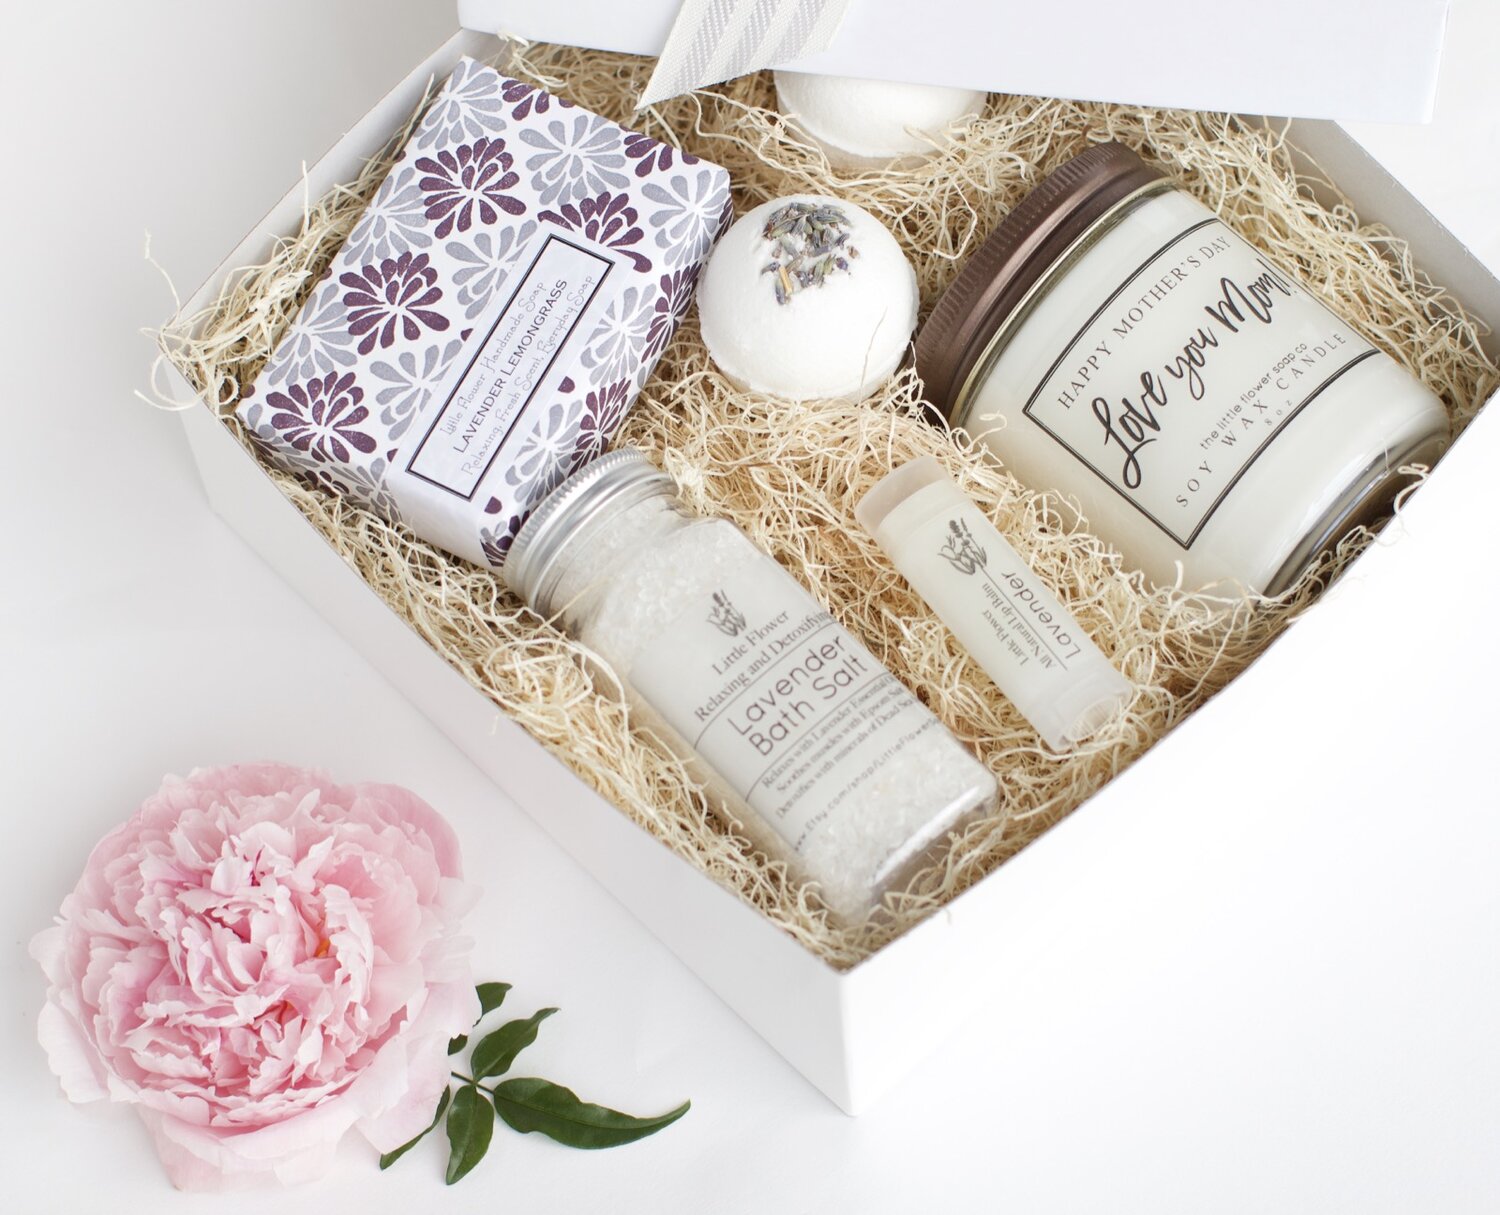 Luxury Lavender Gift Box Handmade Aromatherapy Lavender Spa Gift Basket For Women,Indoor Flowering House Plants Uk